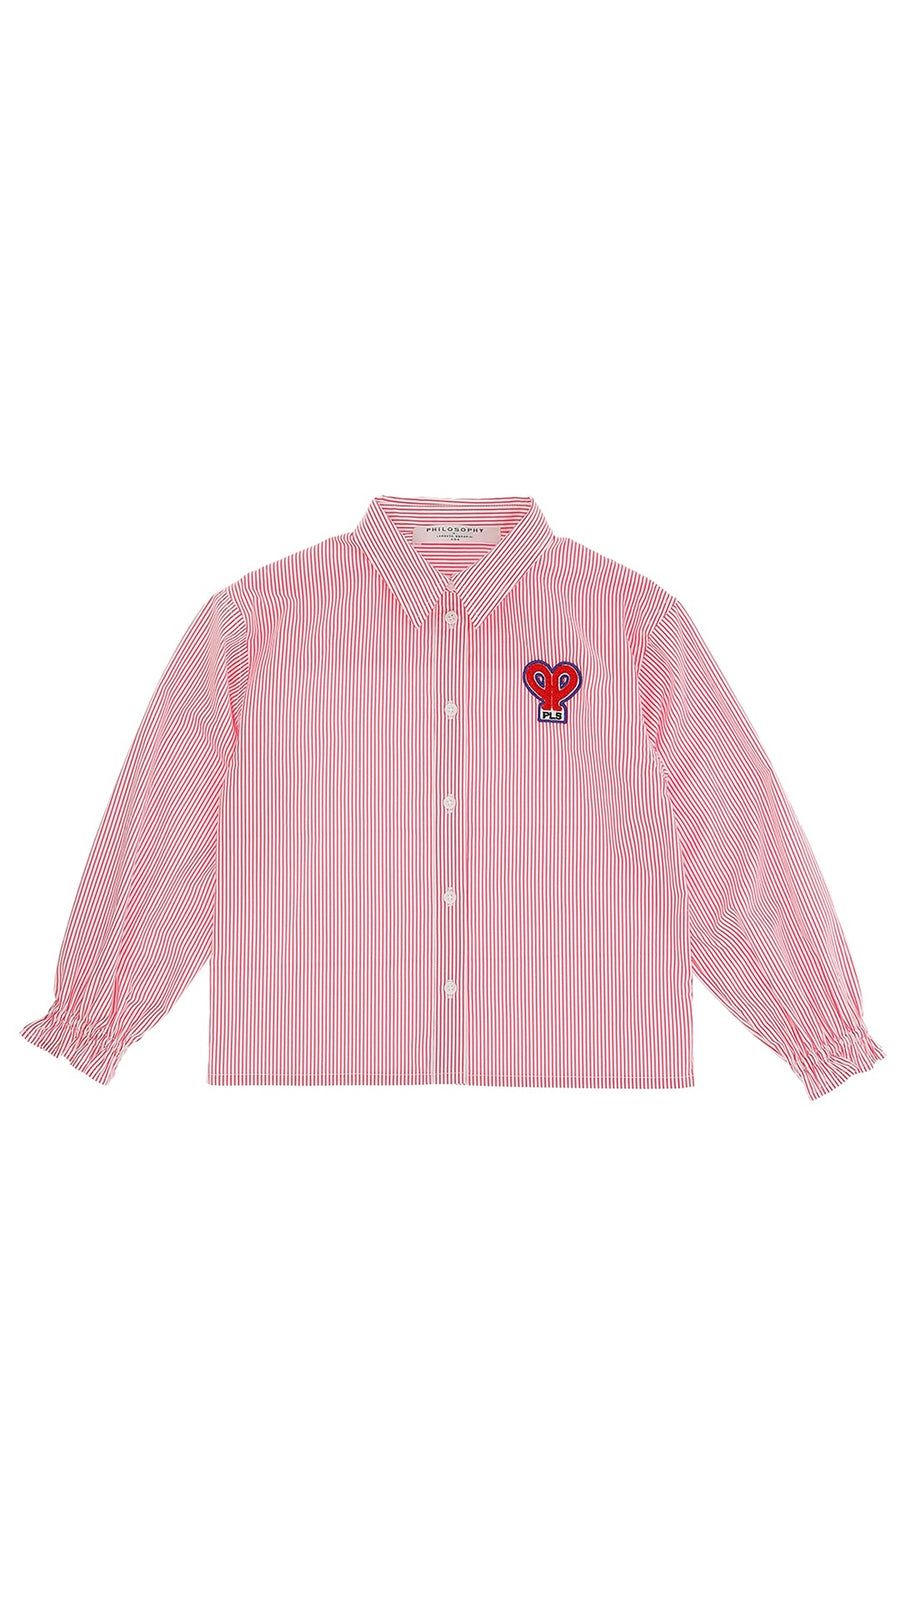 Shirt in Striped Poplin - White Pink - Posh New York